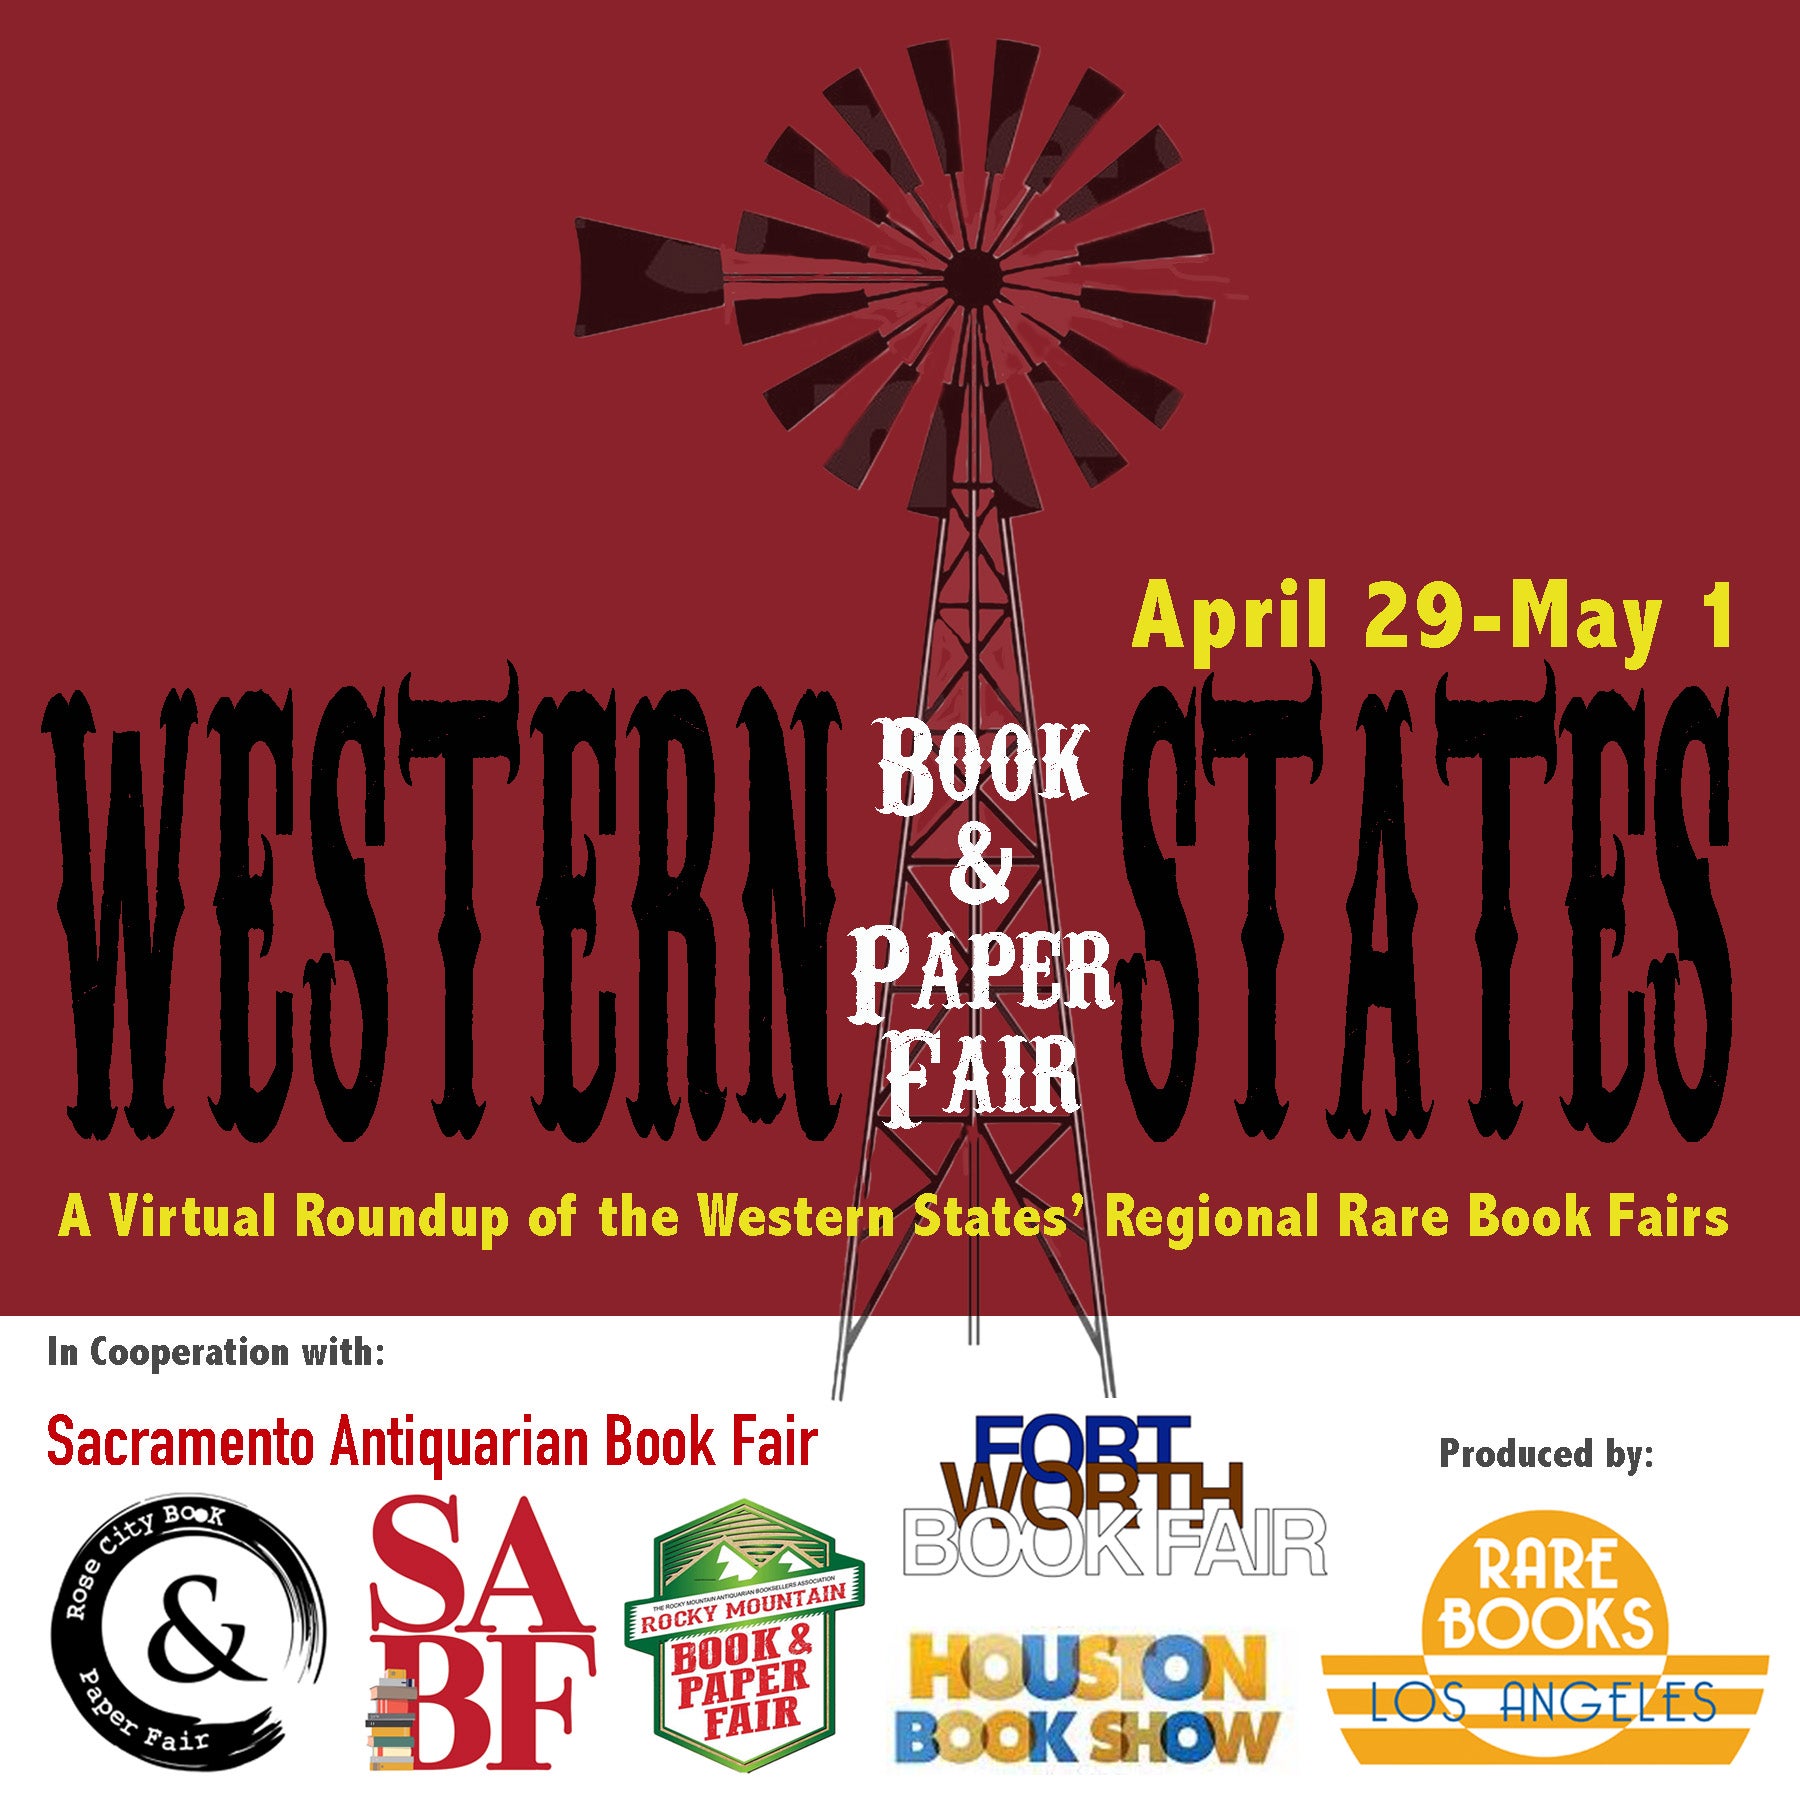 Western States Book & Paper Fair